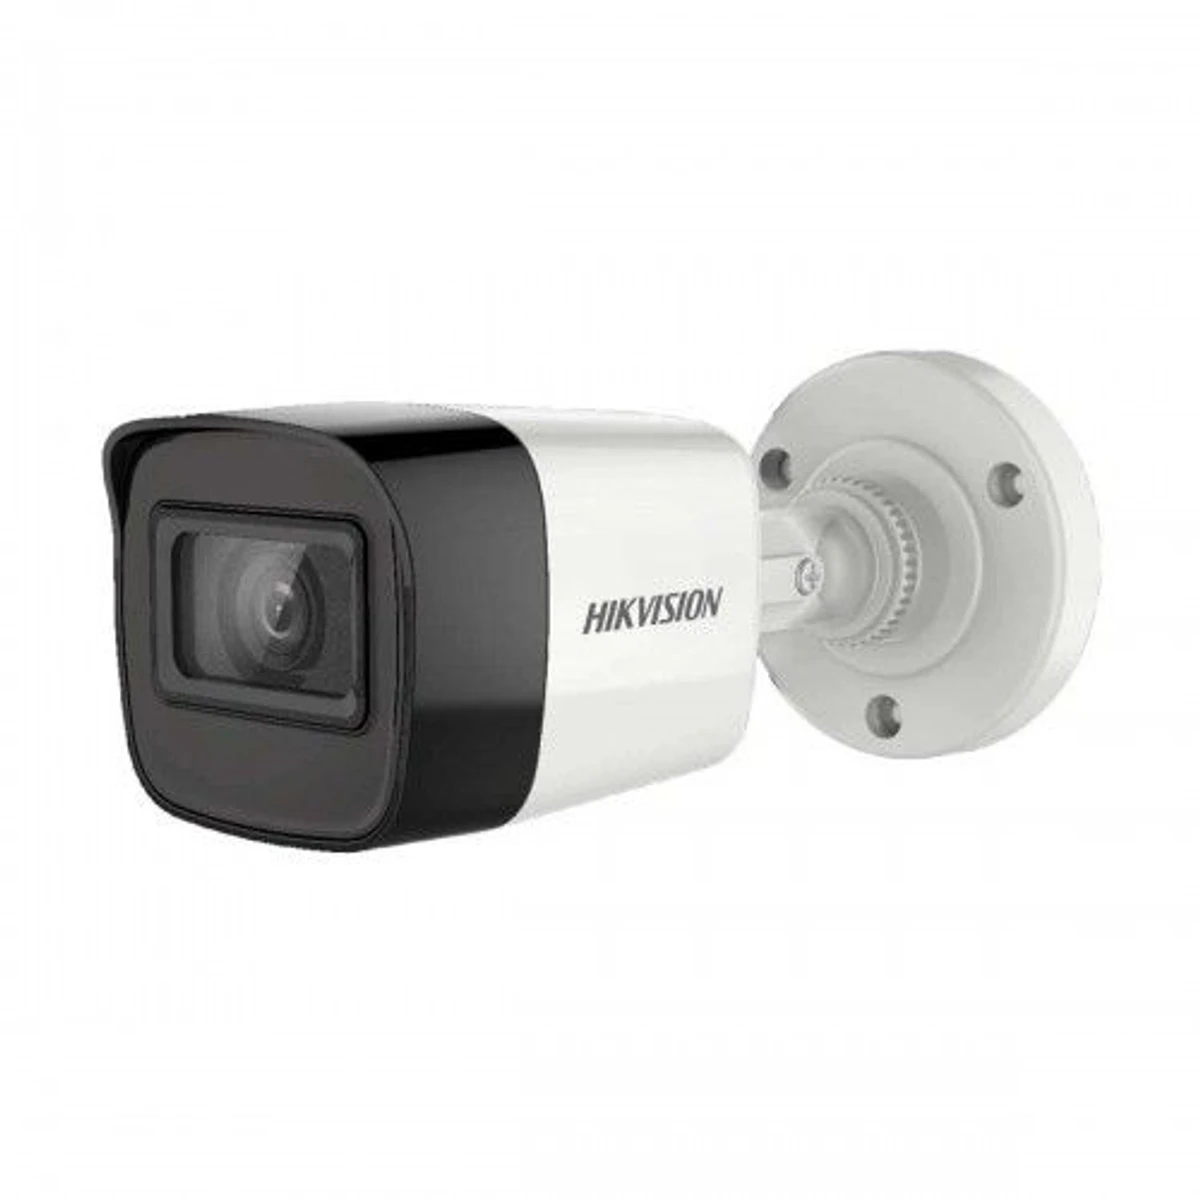 Hikvision 2MP Audio Fixed Mini Bullet Camera (DS-2CE16D0T-ITPFS)